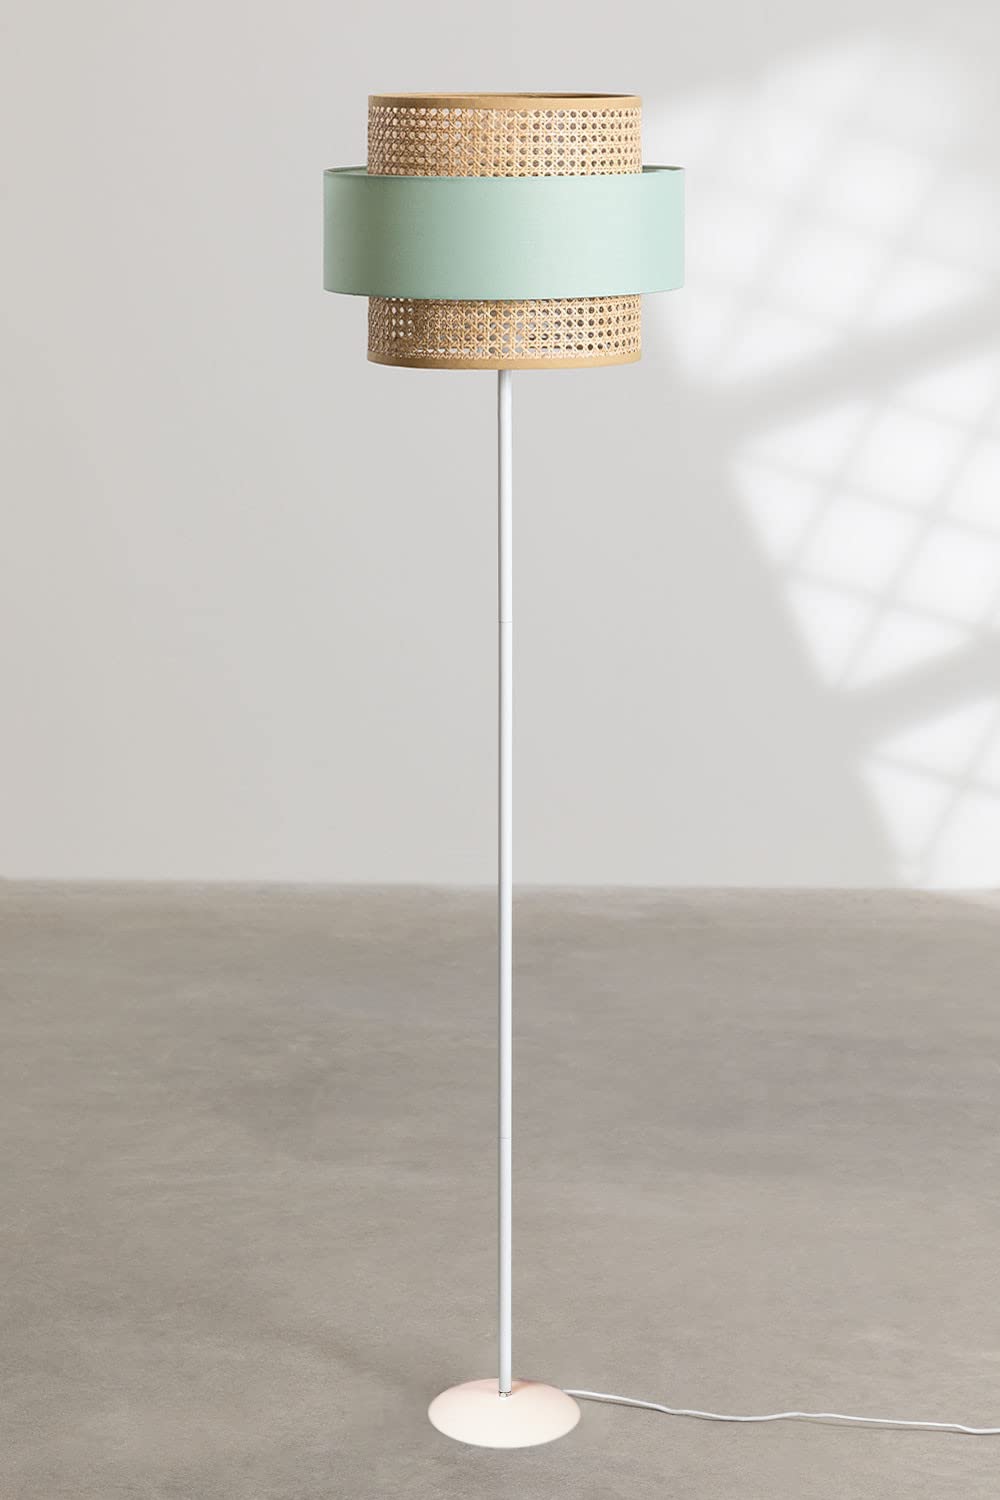 AKWAY Rattan Cane Webbing Floor Lamp Bamboo Floor Lamp Cane Floor Lamp Standing Lamp Wooden Standing lamp for Living Room Bedroom (14" D X 11")(White Stand) (Olive Green) - Akway